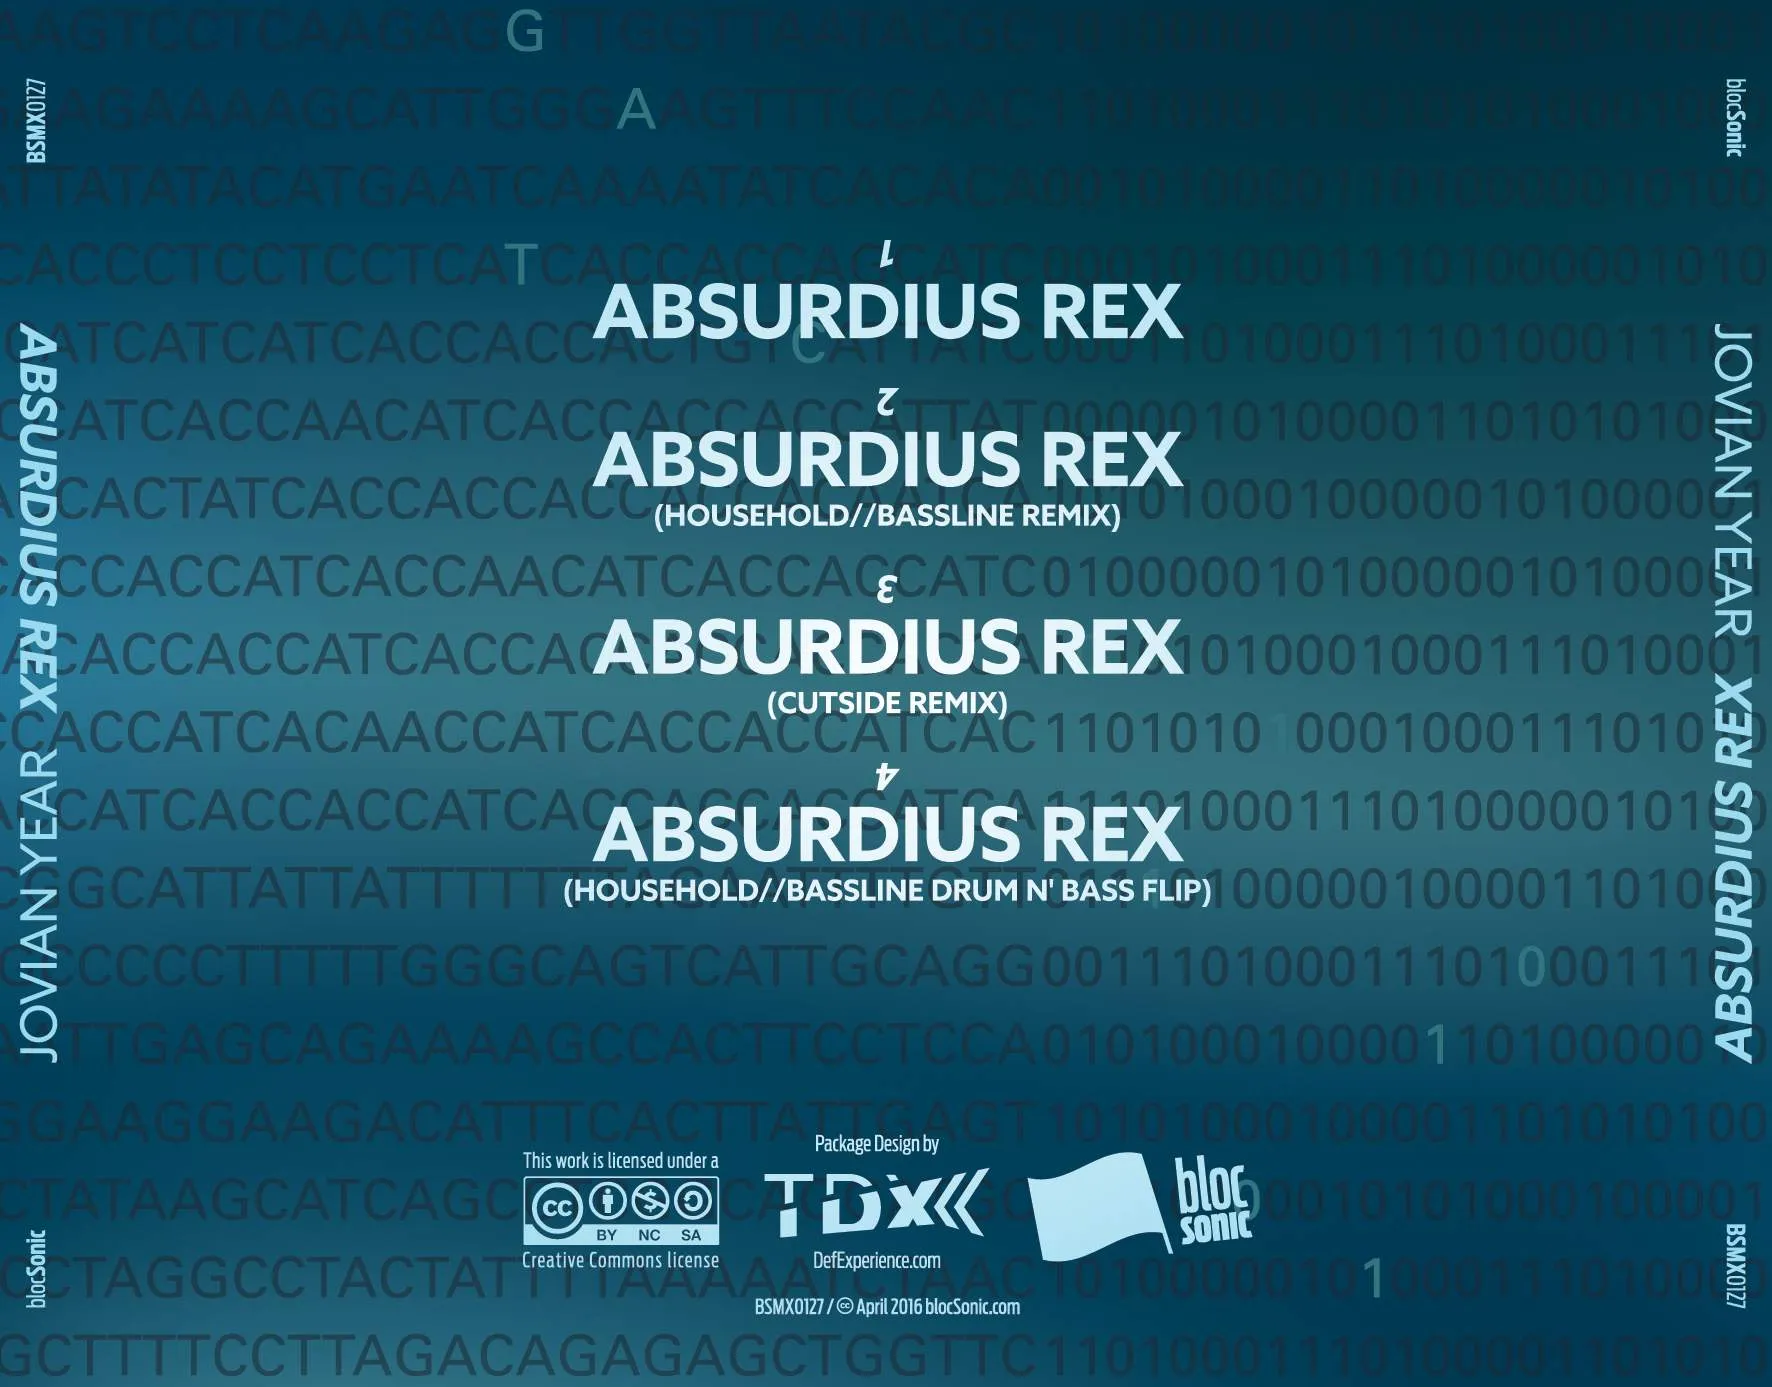 Album traycard for “Absurdius Rex” by Jovian Year